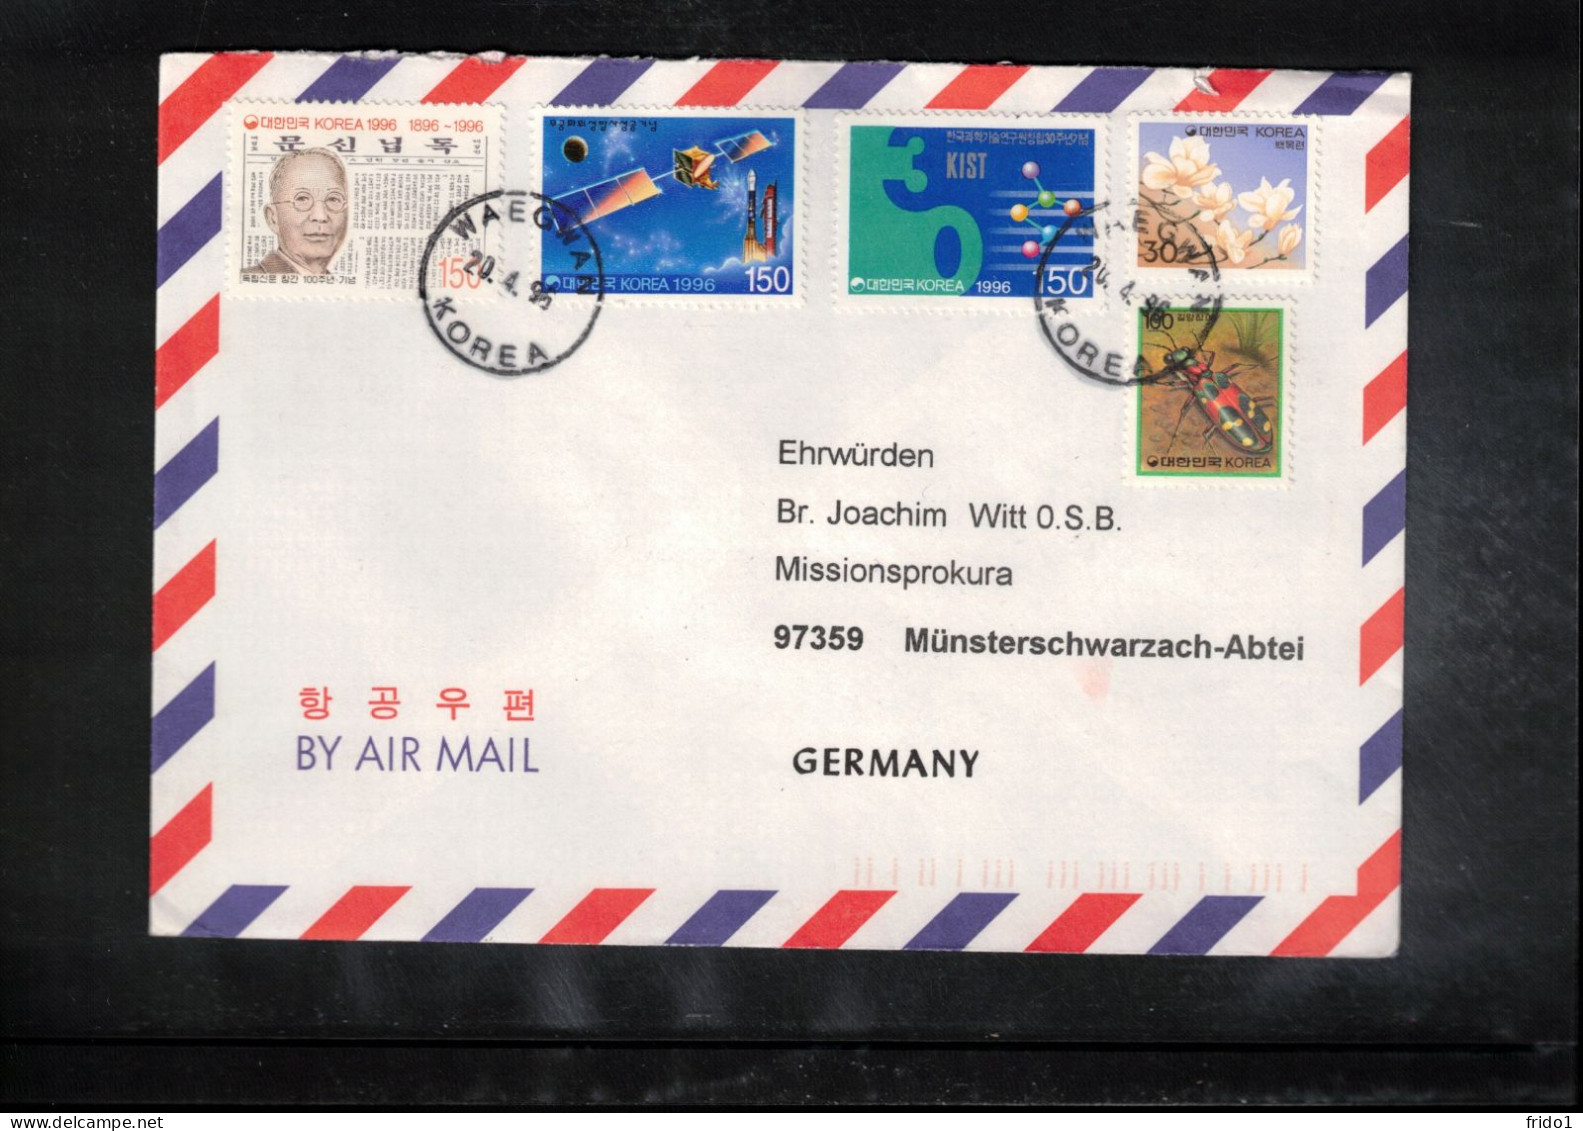 South Korea 1996 Interesting Airmail Letter - Korea, South